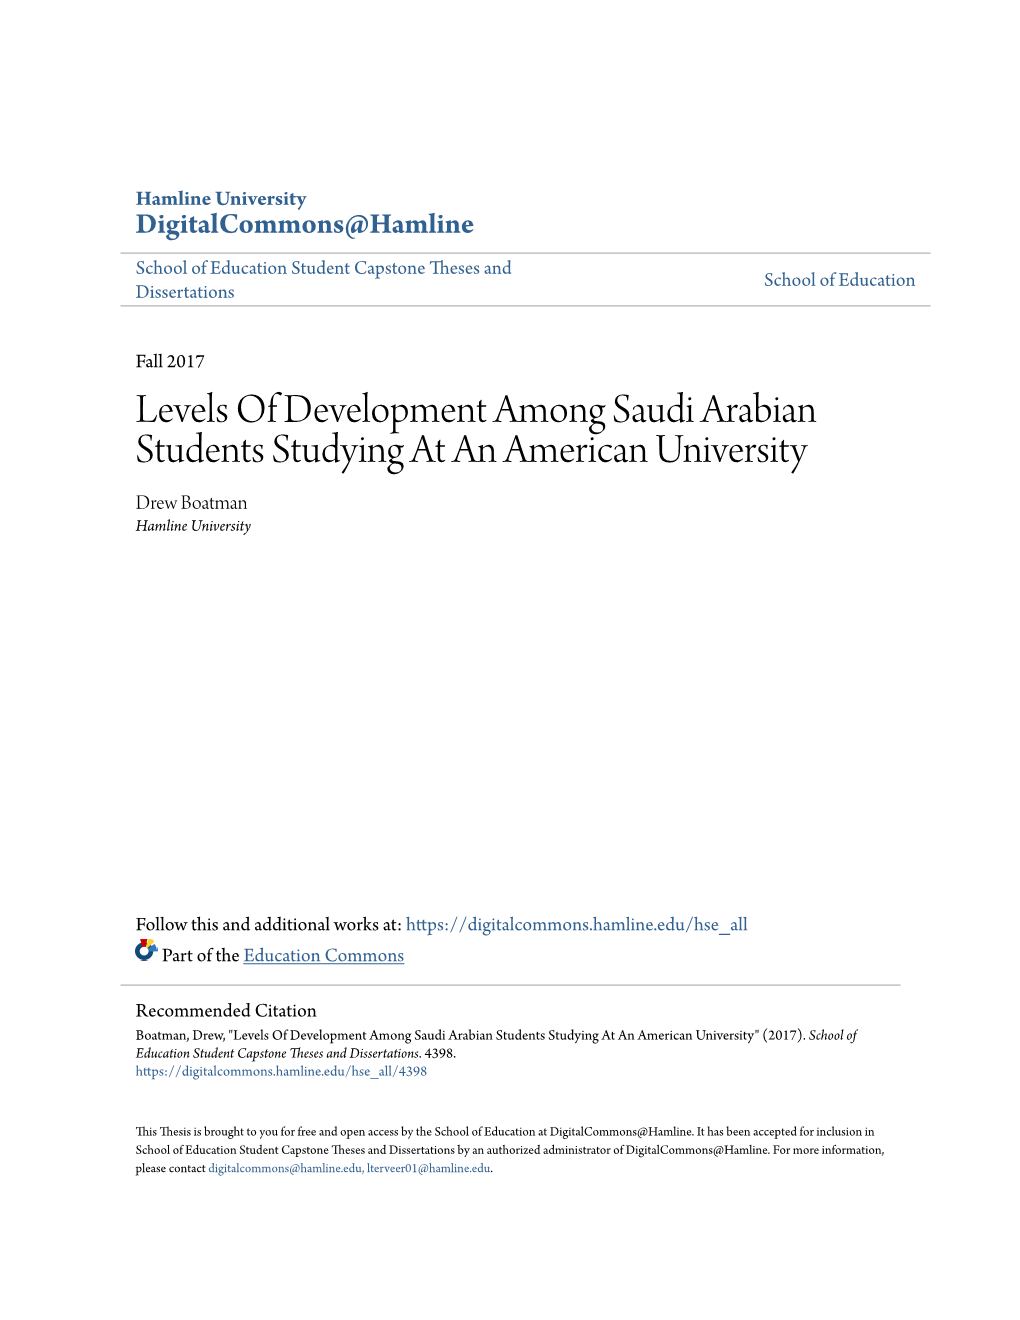 Levels of Development Among Saudi Arabian Students Studying at an American University Drew Boatman Hamline University